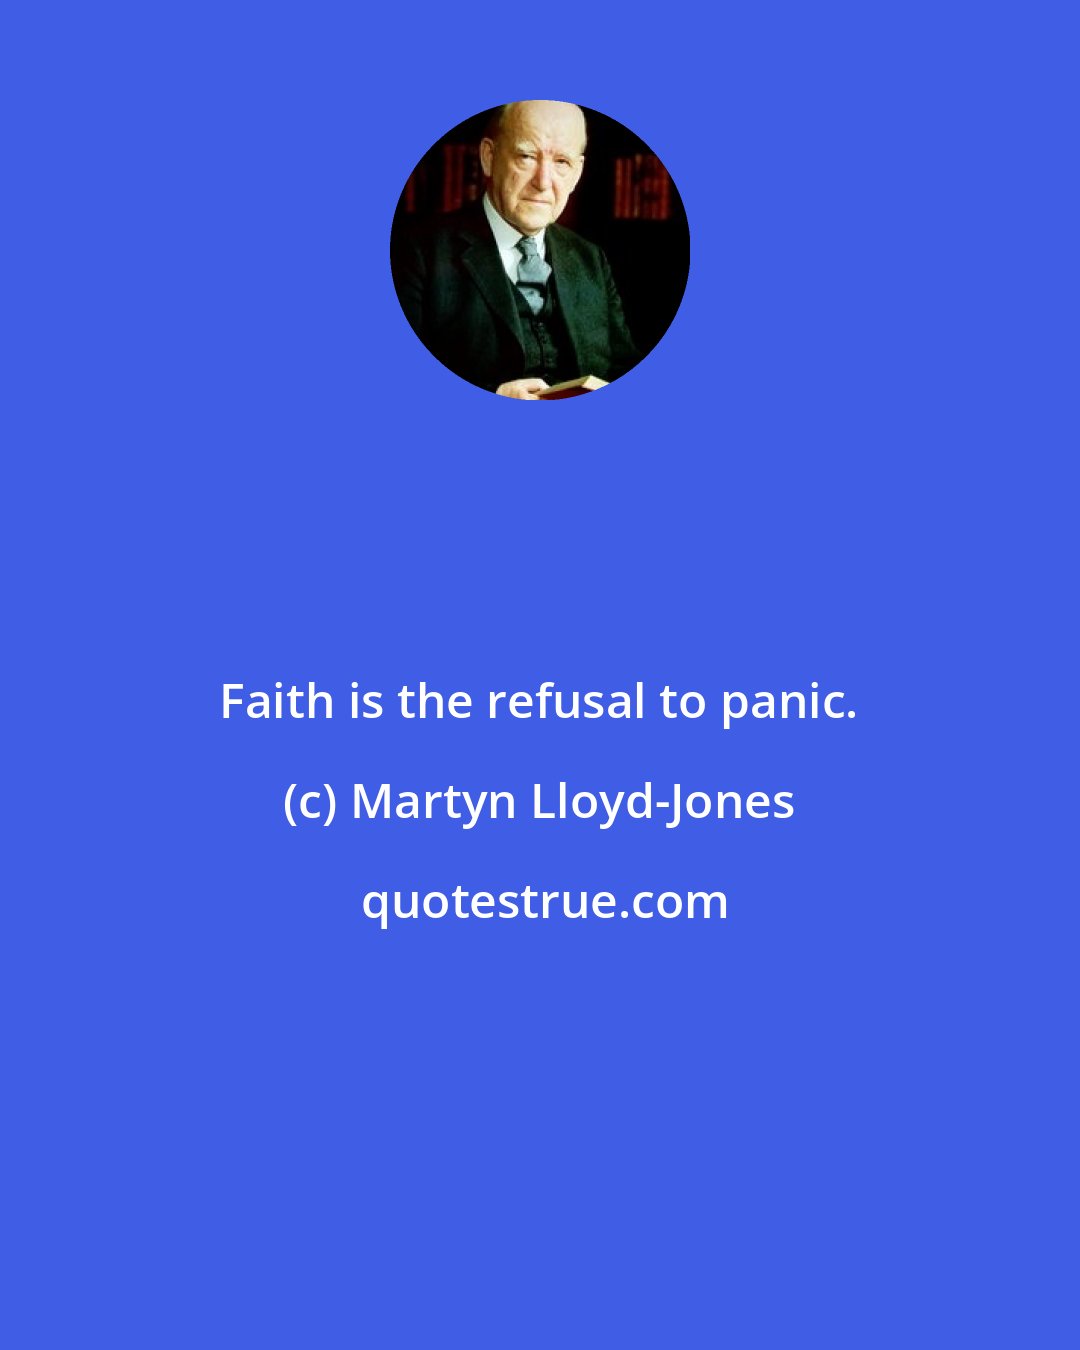 Martyn Lloyd-Jones: Faith is the refusal to panic.